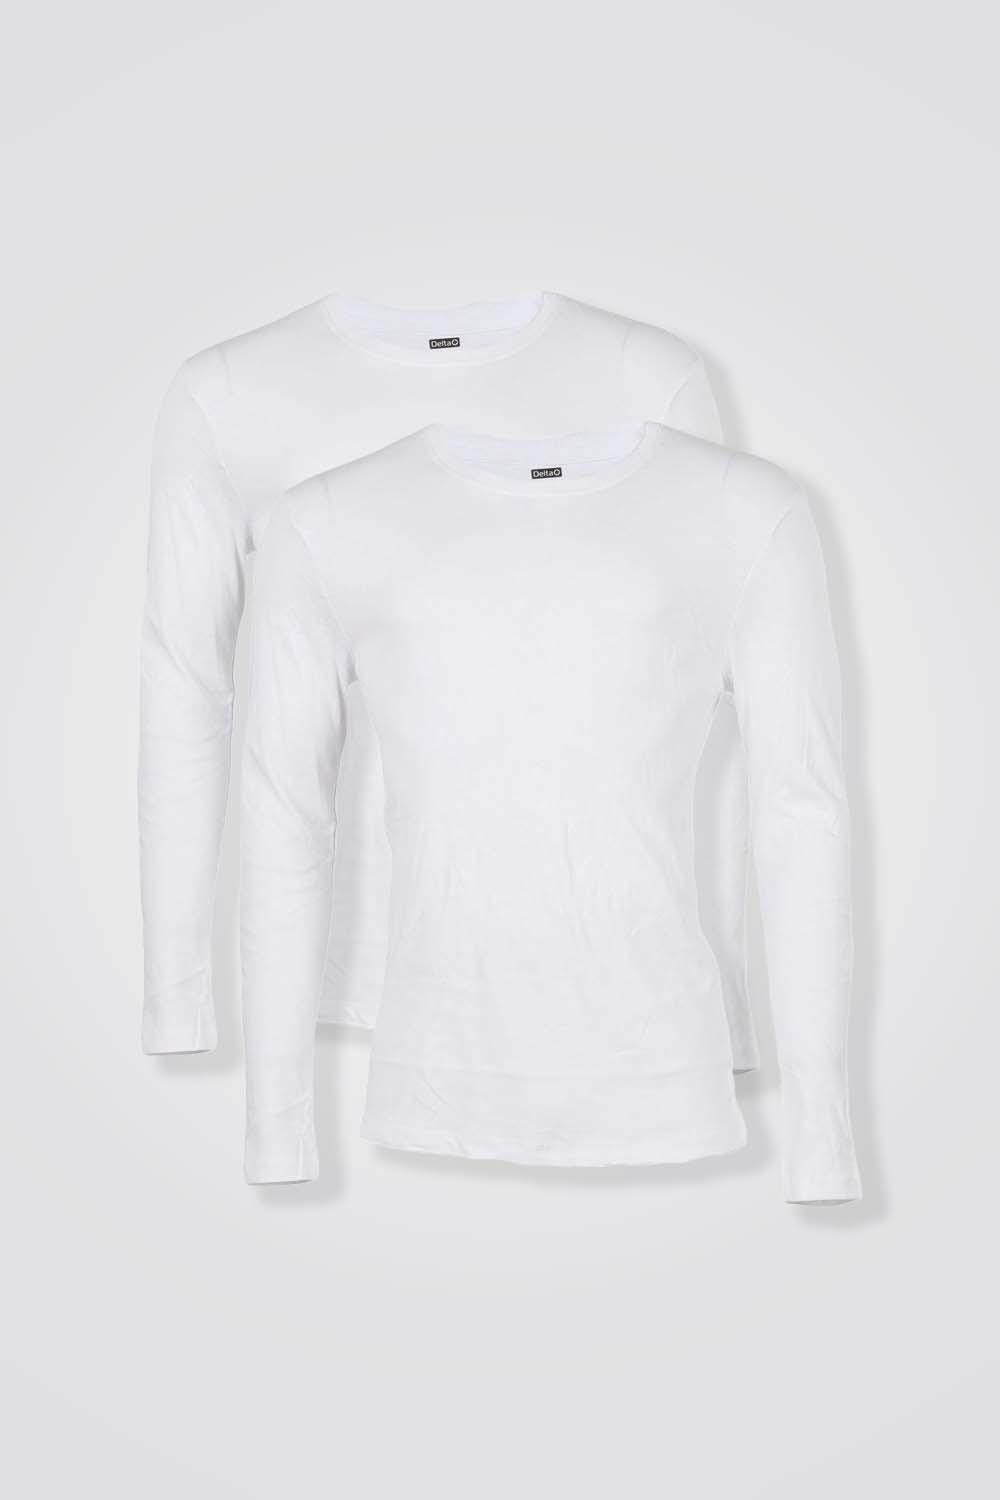 DELTA - מארז 2 חולצות שרוול ארוך לבן - MASHBIR//365